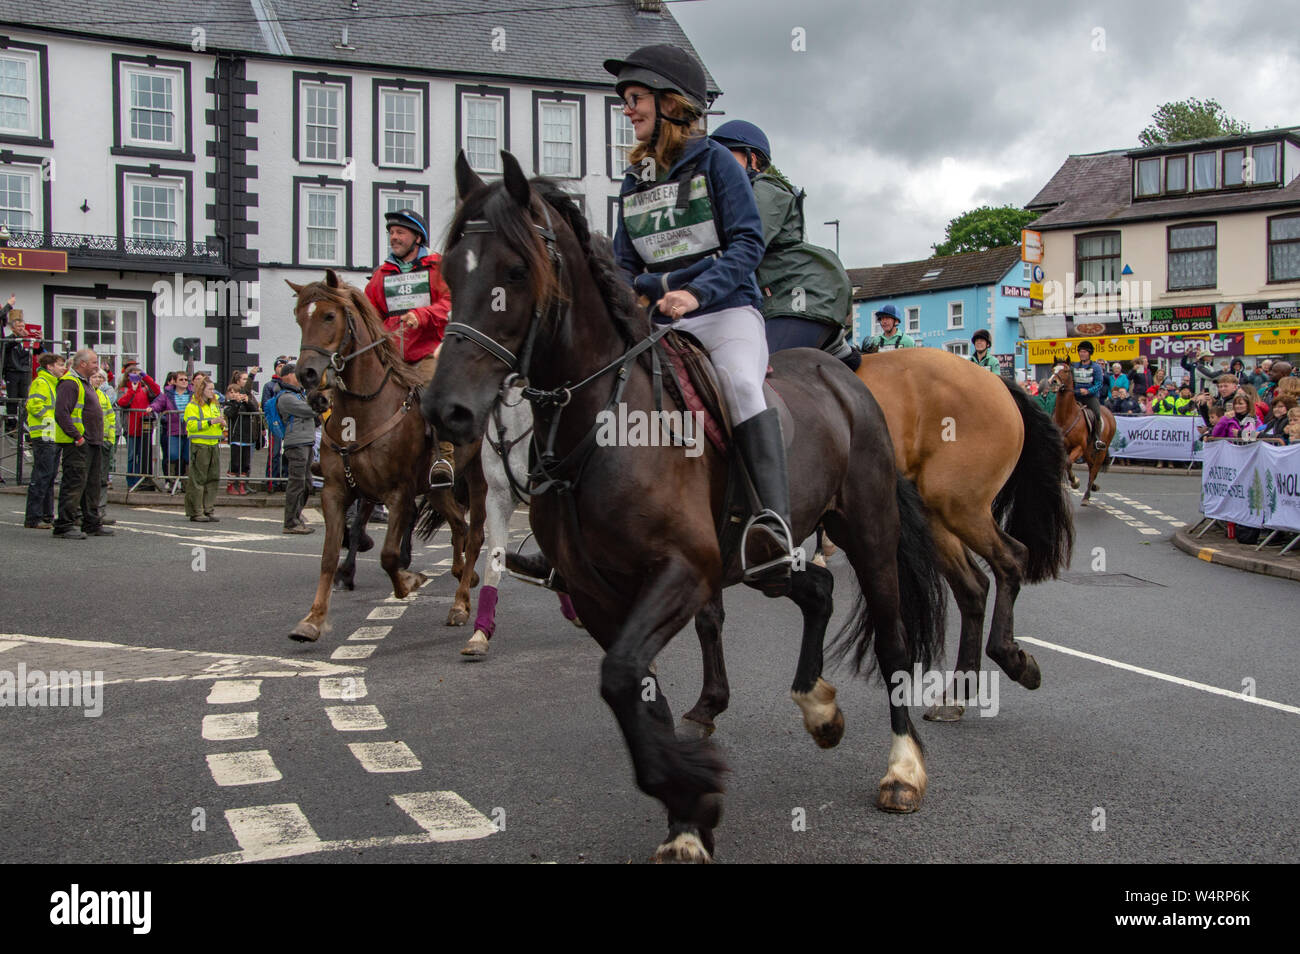 Start of the Man v Horse marathon race, Llanwrtyd Wells, Powys, Wales. 2019. Stock Photo